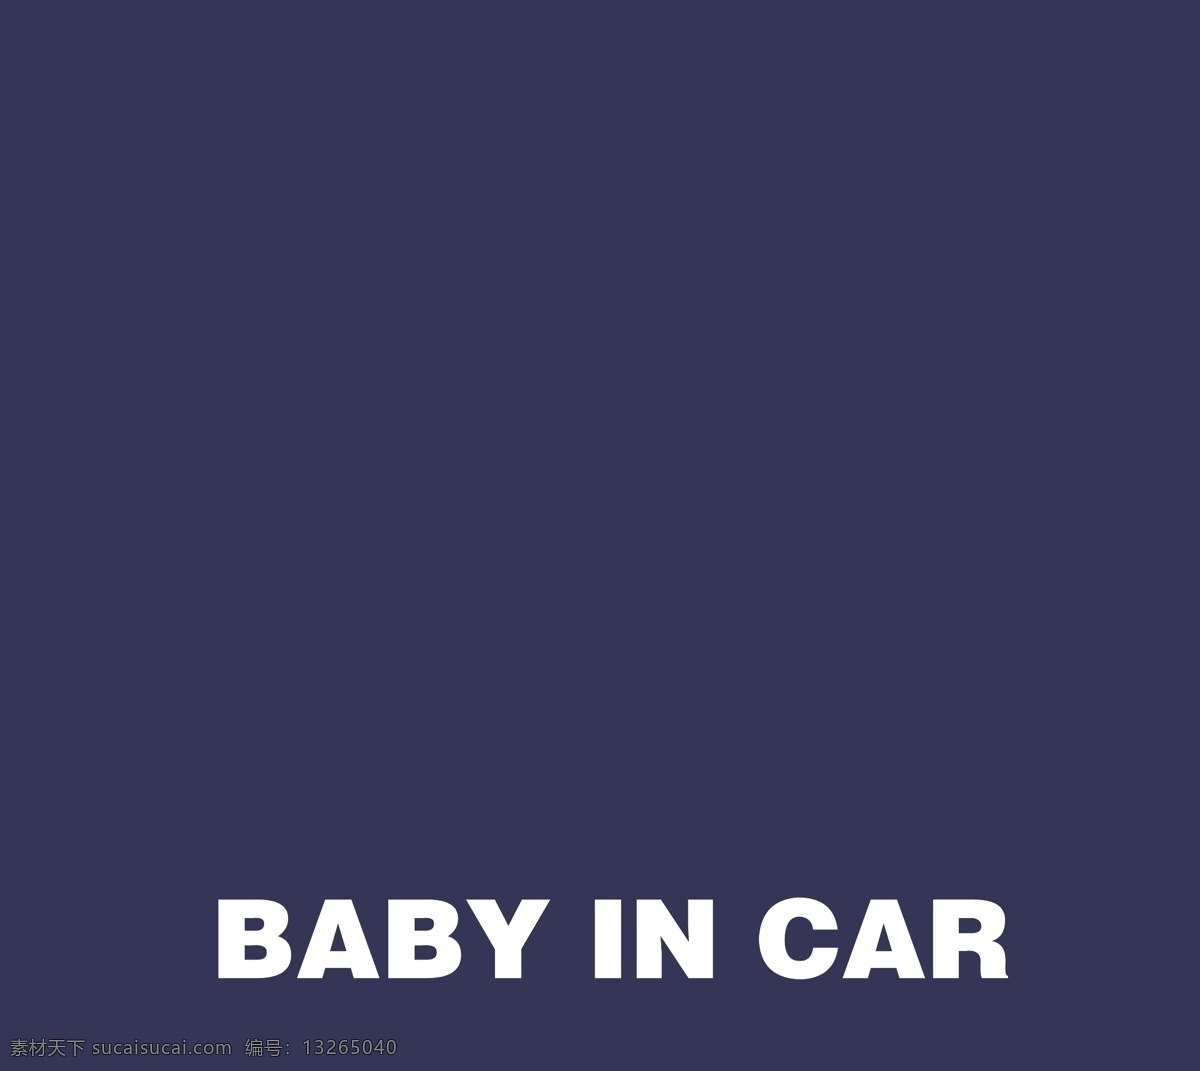 babyincar 车内有宝宝 baby in car 小心 车贴 卡通 矢量 标志 标志图标 其他图标